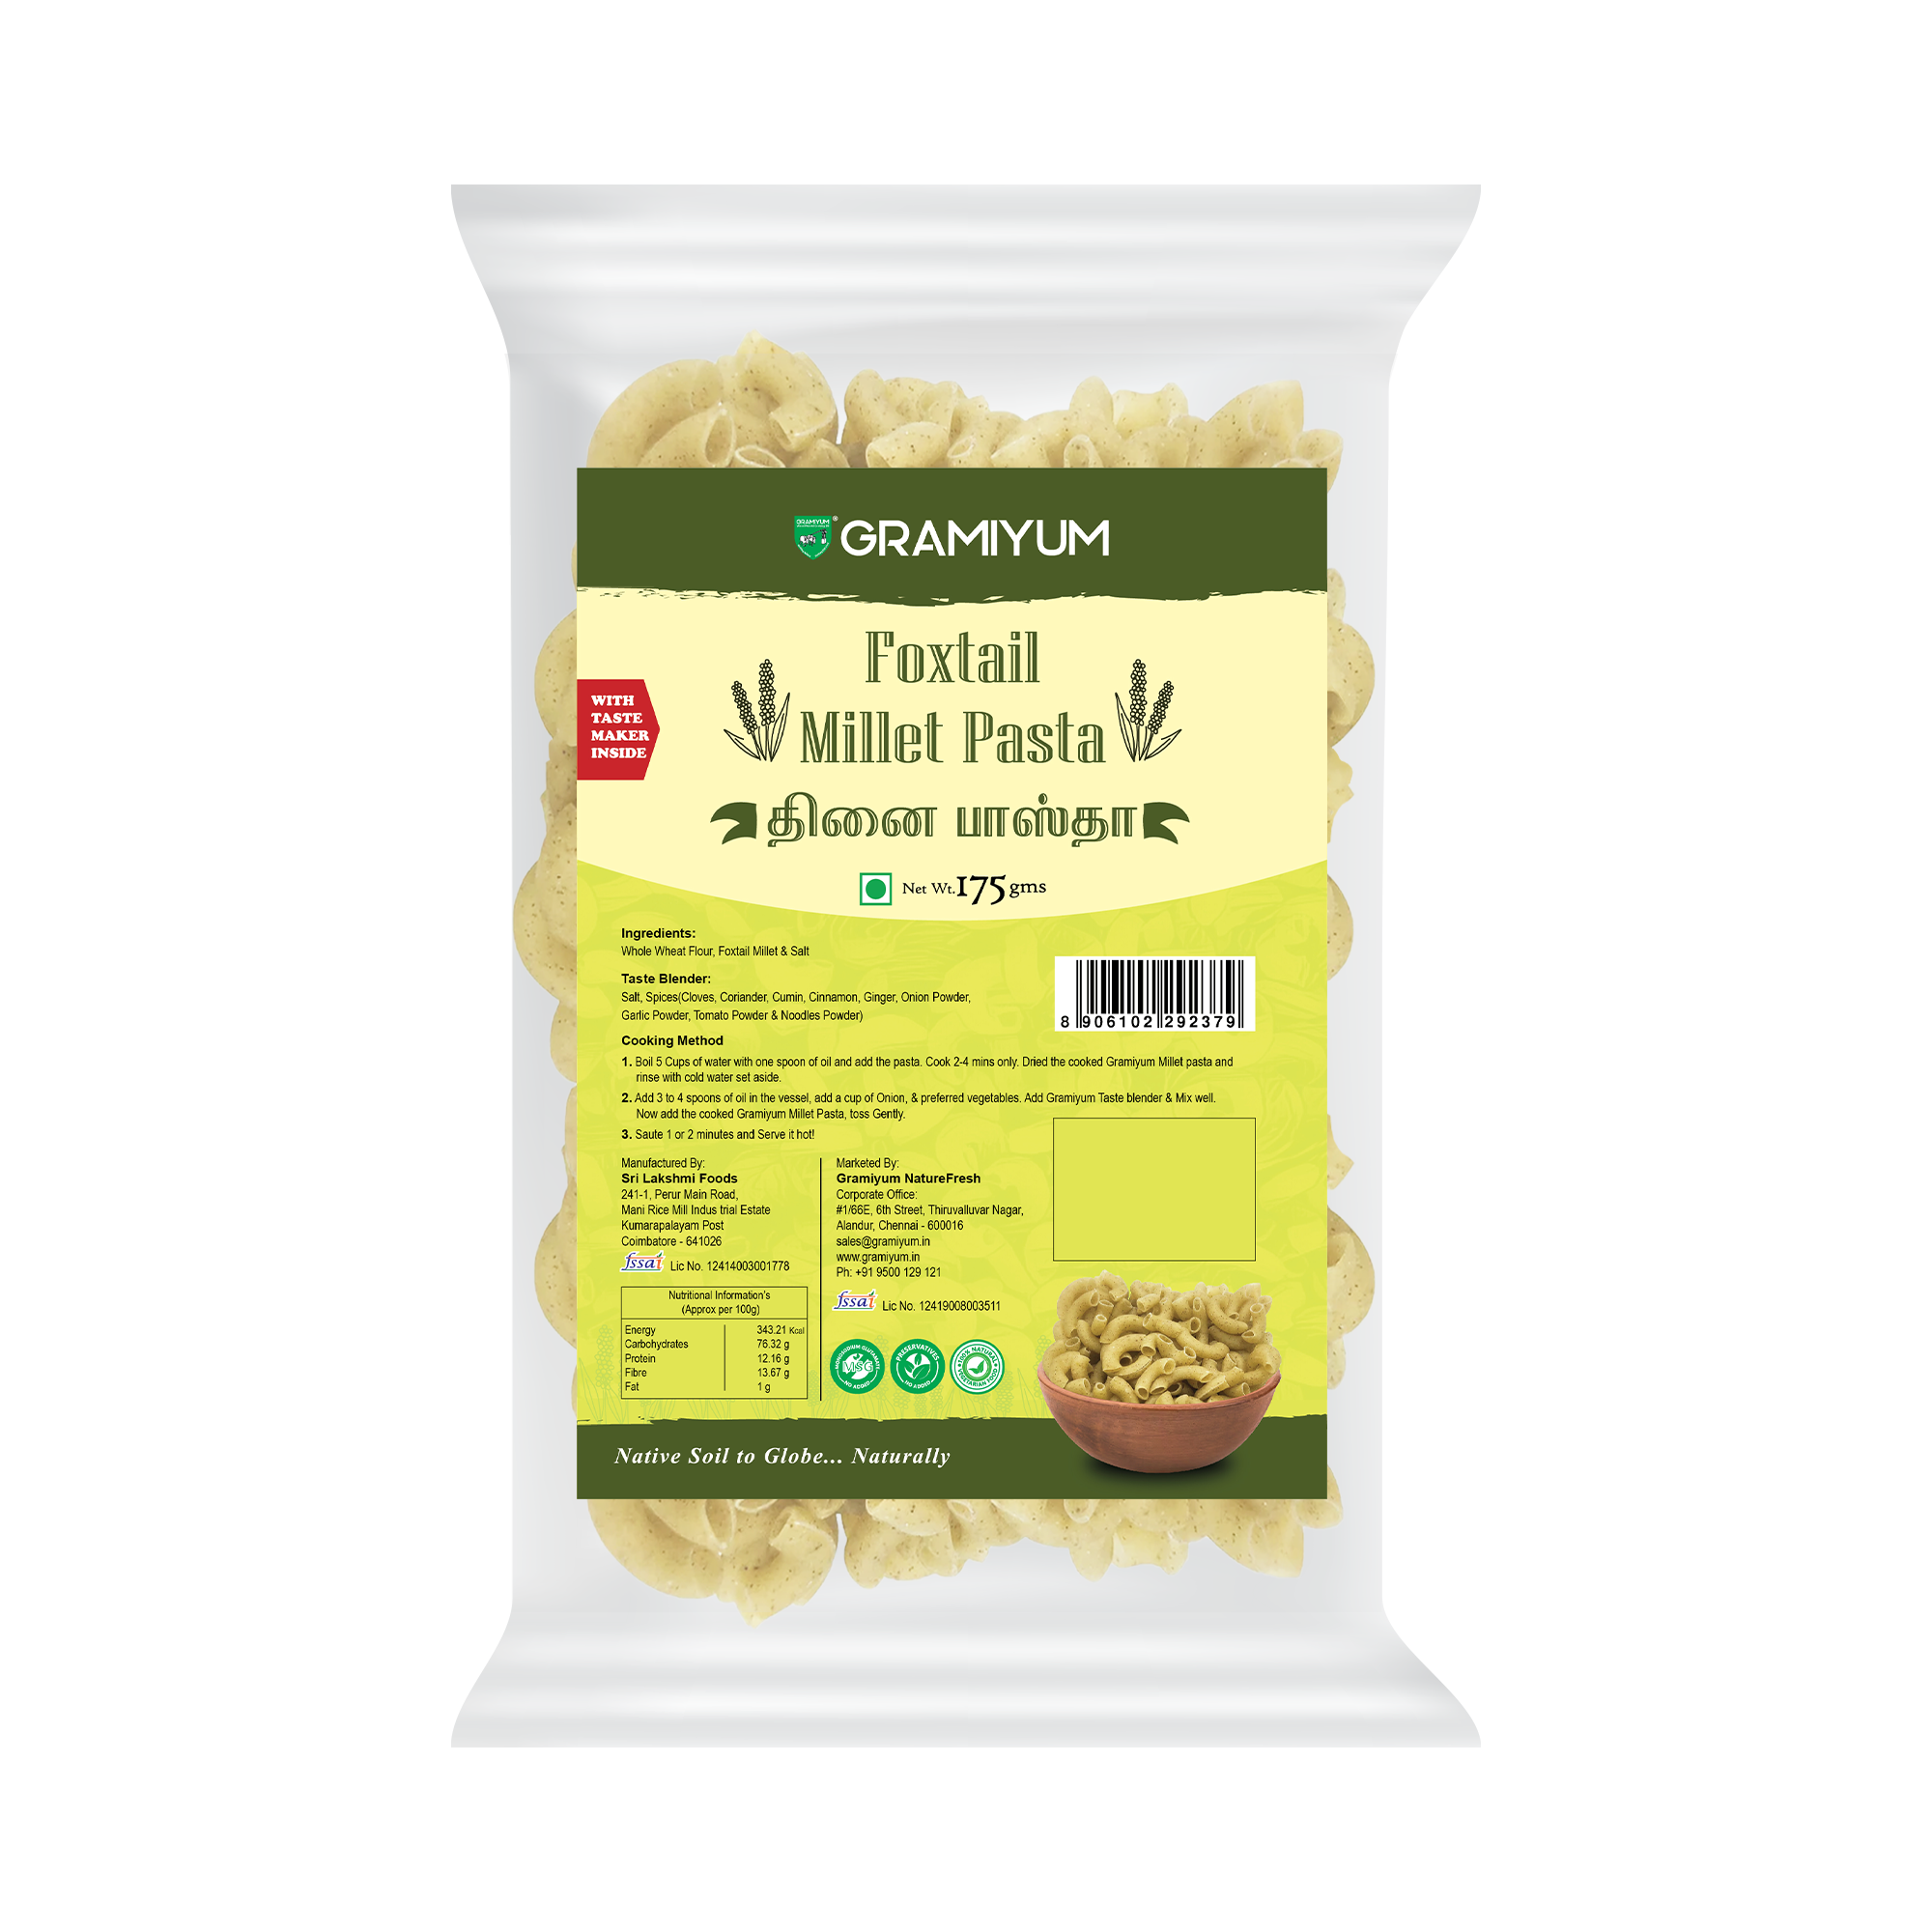 Pasta – Foxtail Millet (Thinai Pasta)